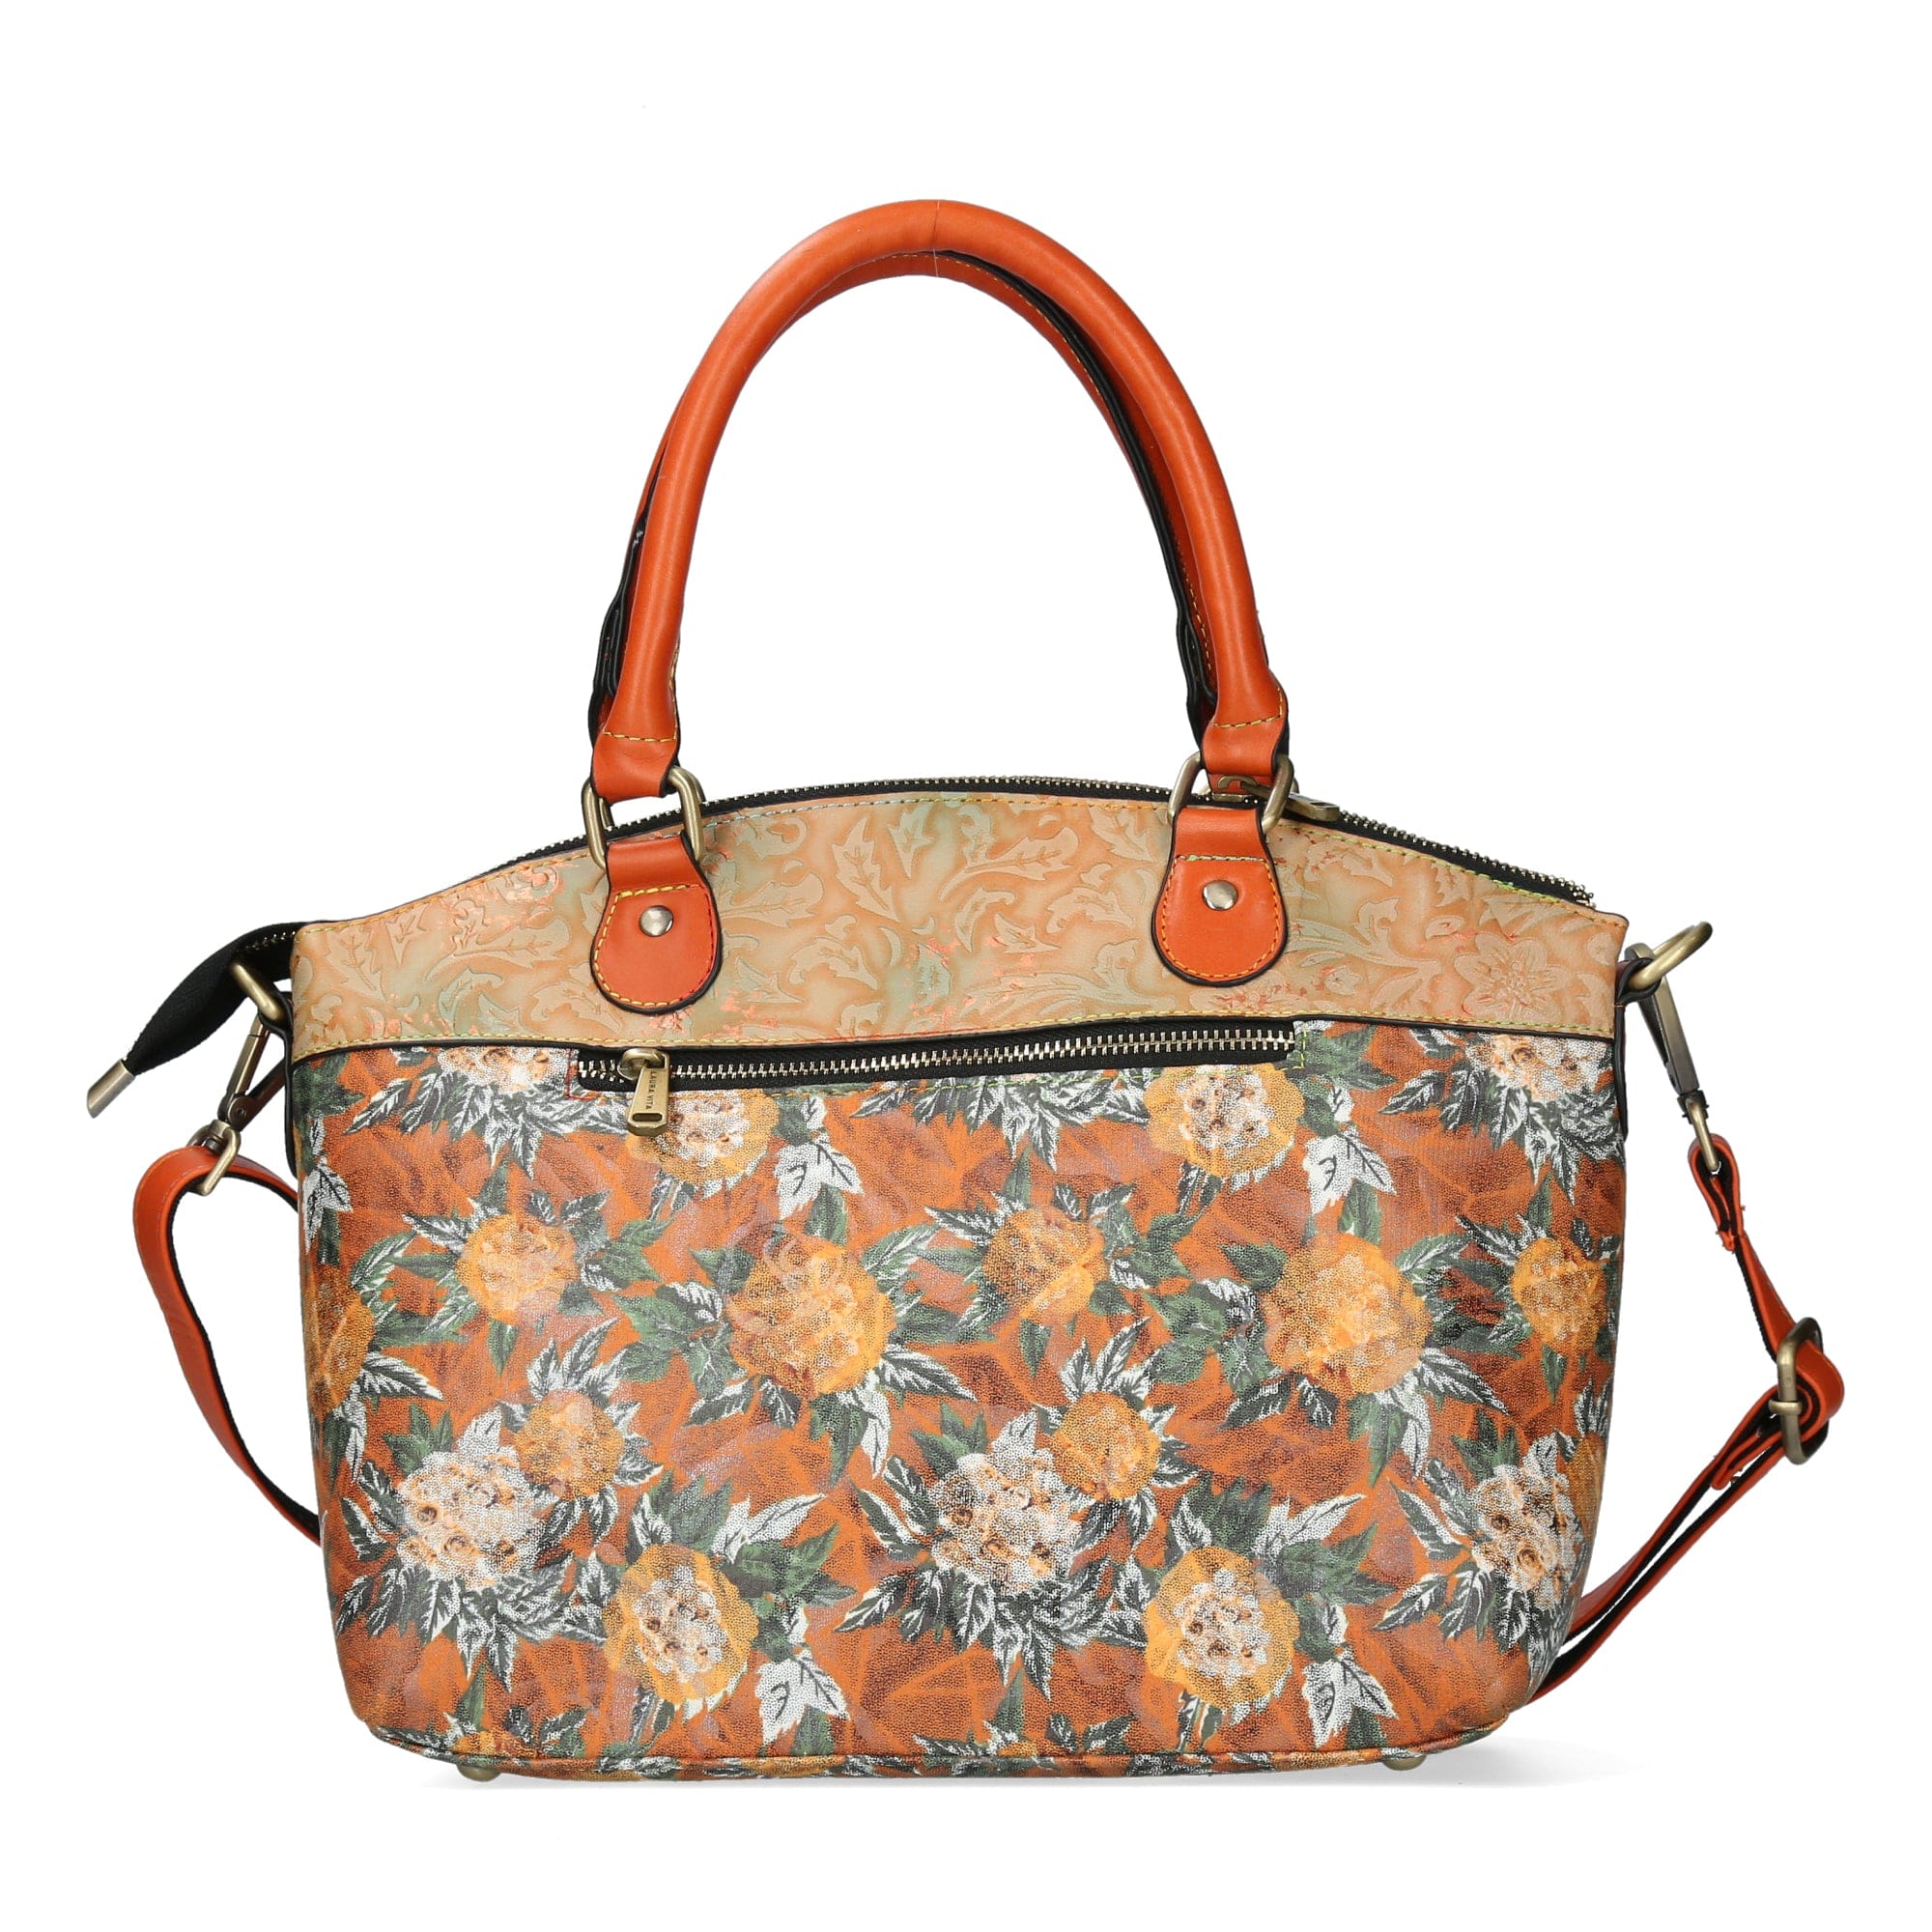 Handbag 4736 - Bag